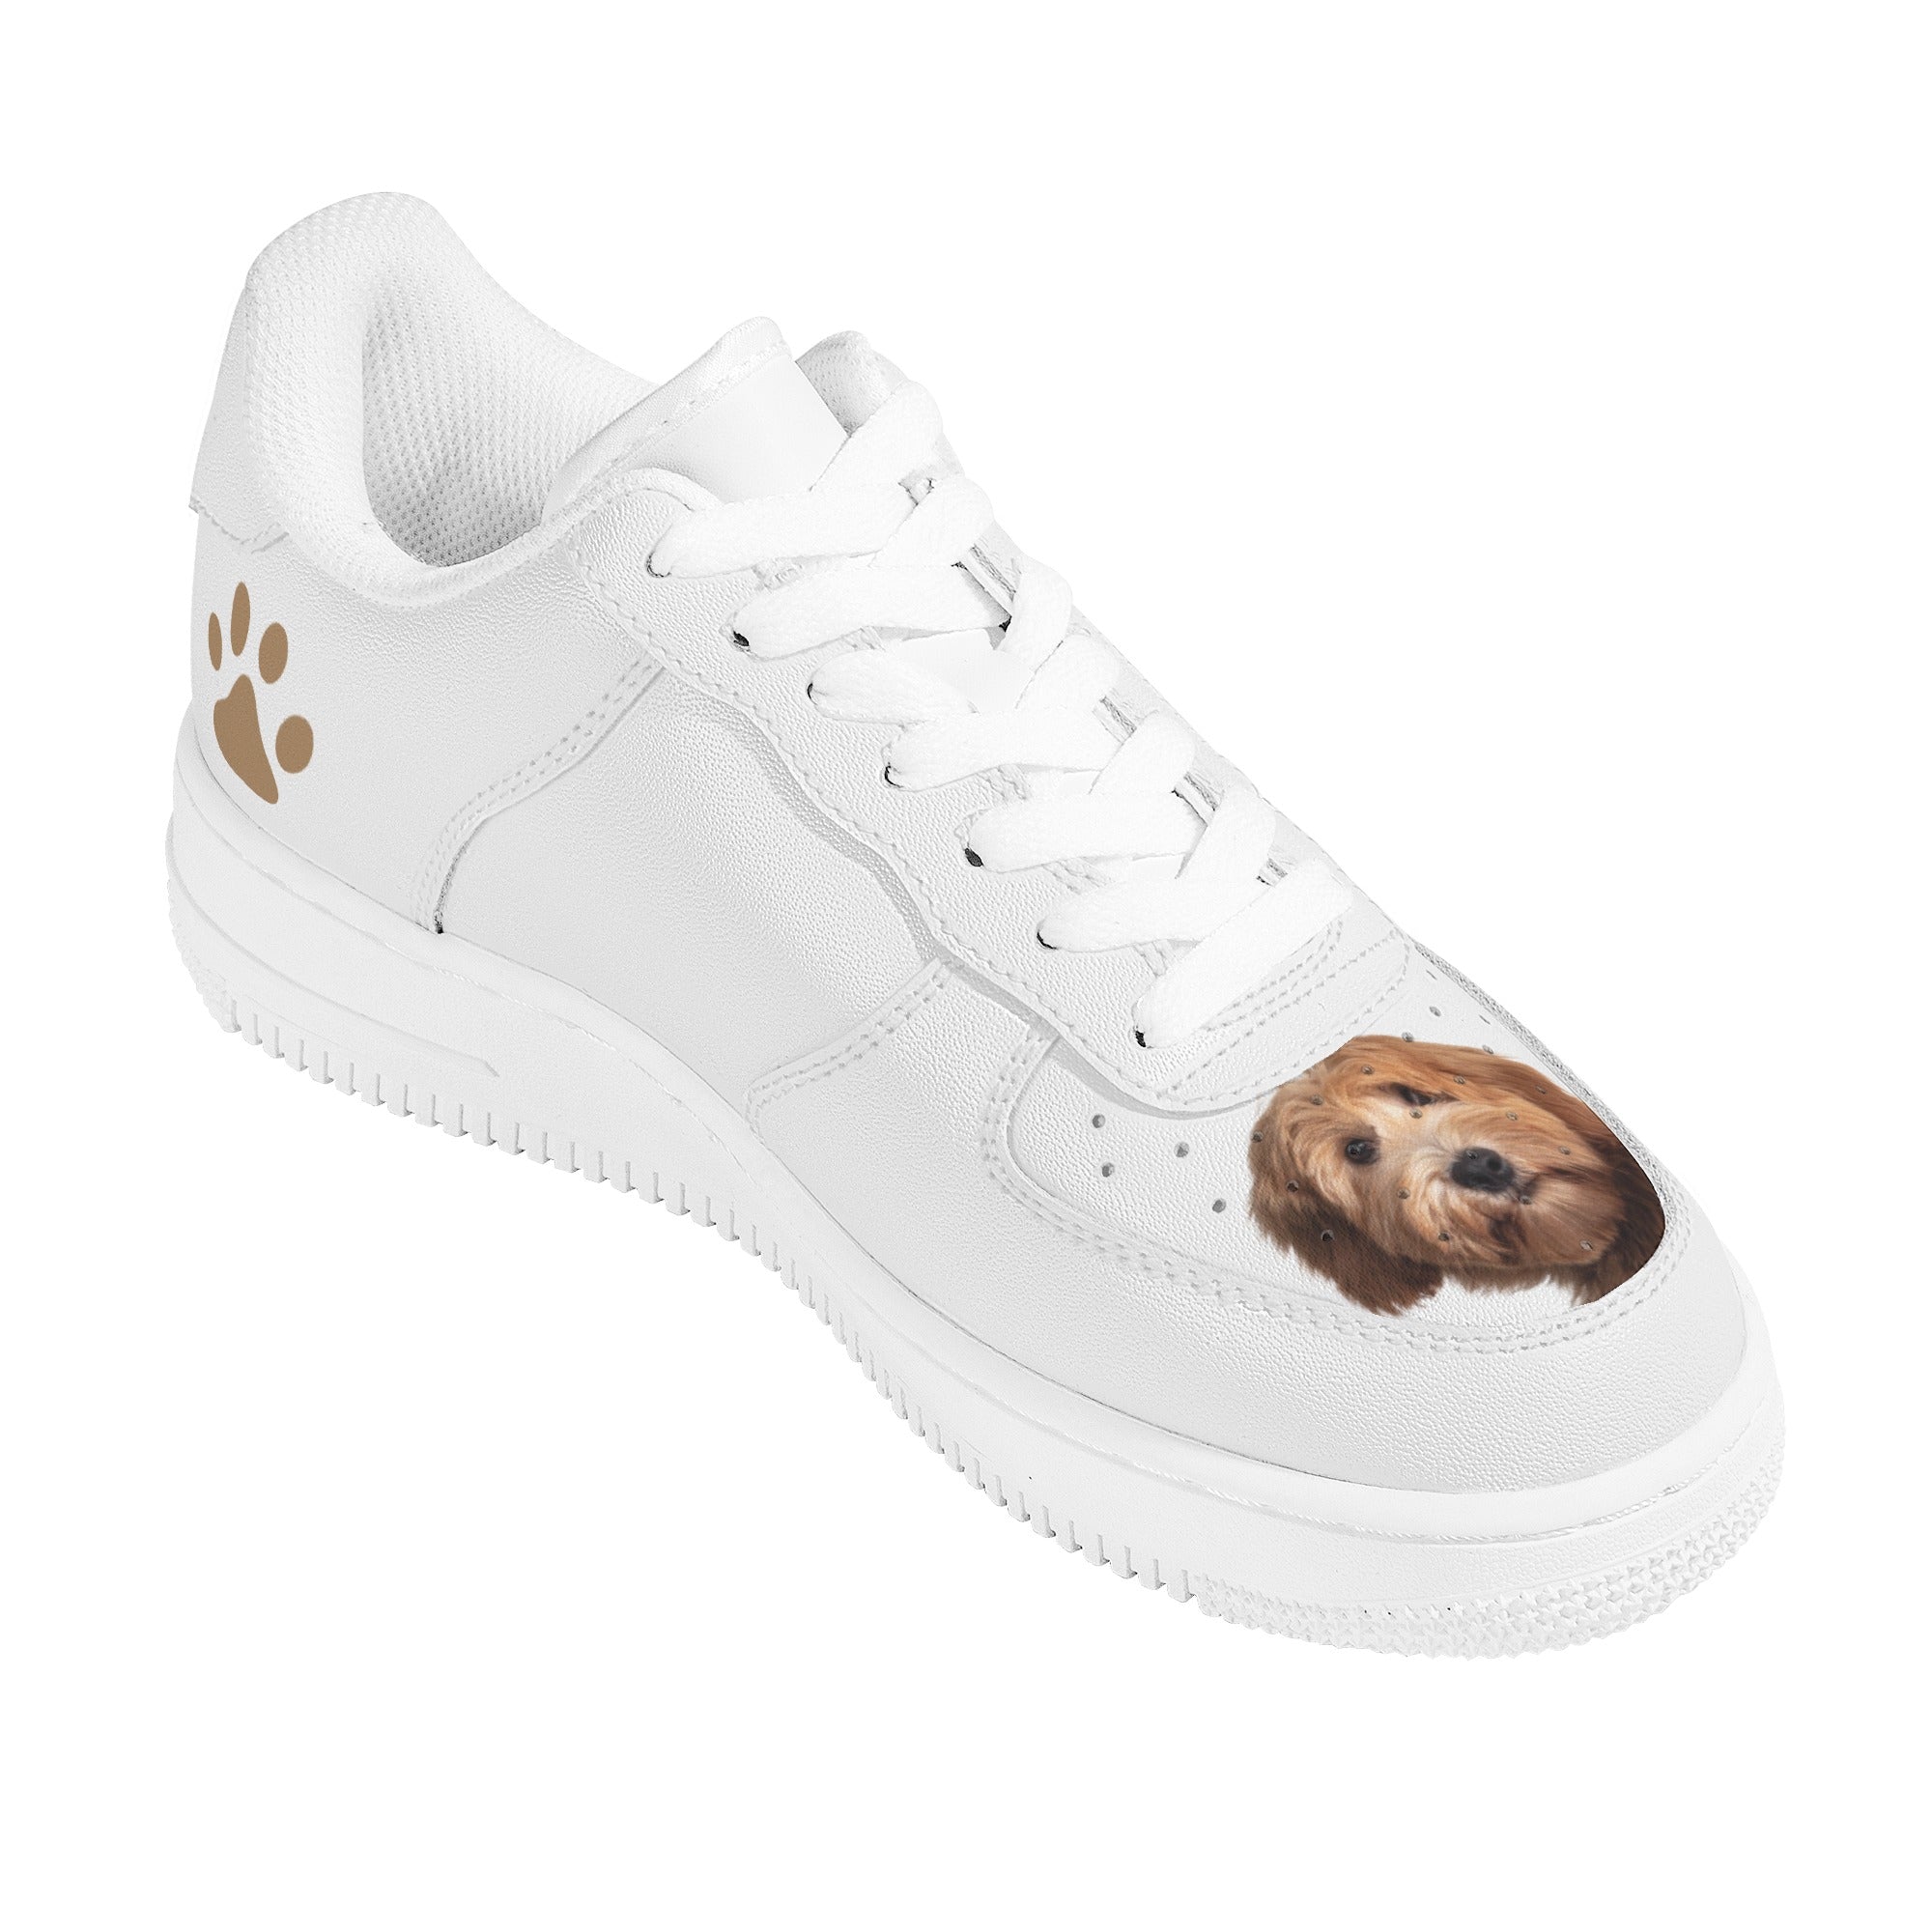 Curious Dog Shoes | Pet-Dog Themed Customized Sneakers | Shoe Zero